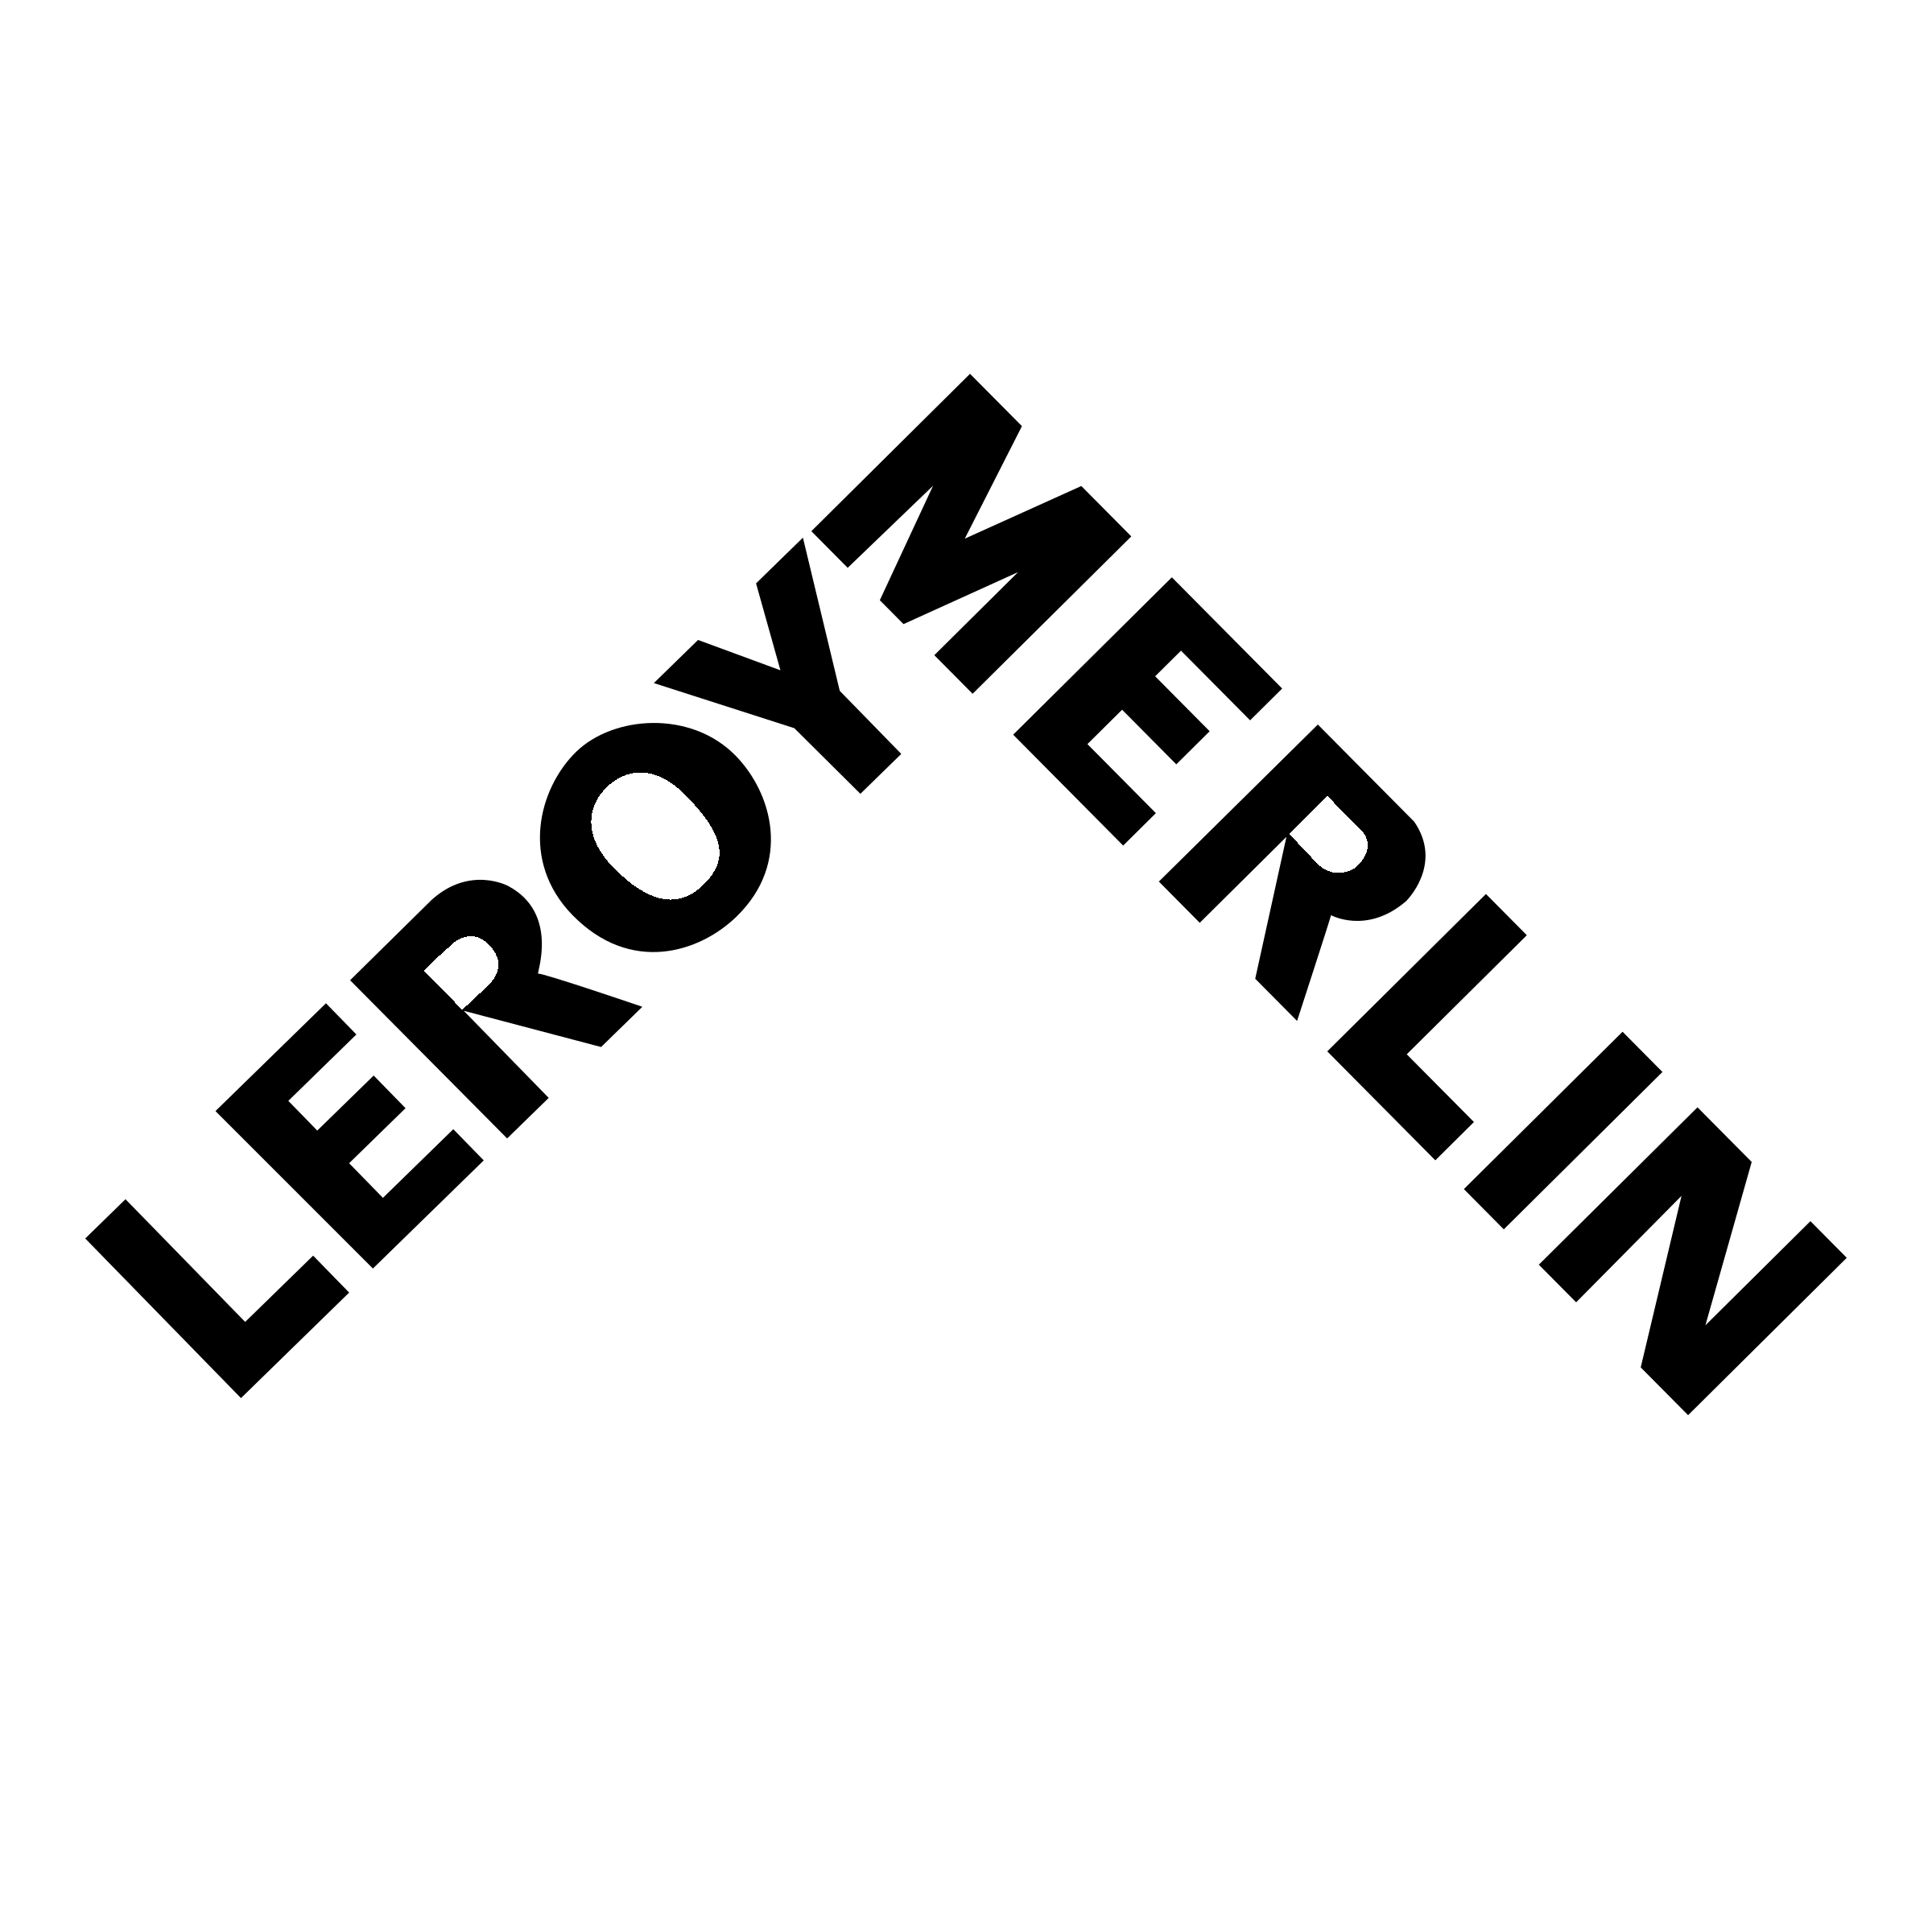 Merlin Logo - Leroy Merlin Logo PNG Transparent & SVG Vector - Freebie Supply